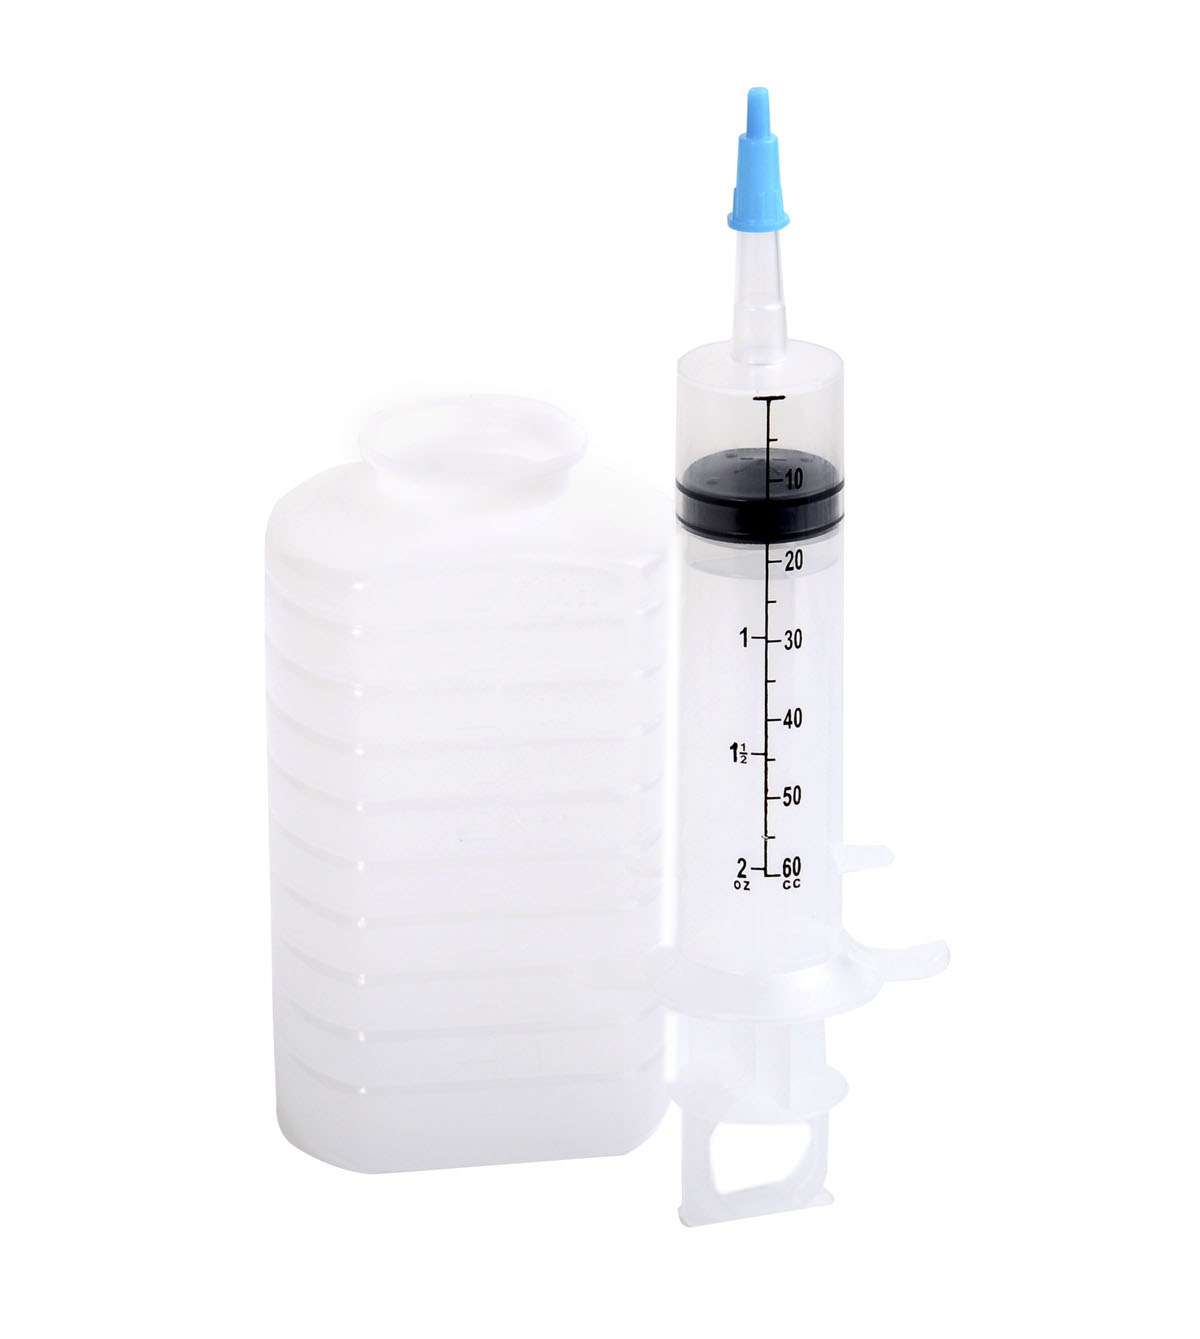 Enteral Feeding Syringe kit